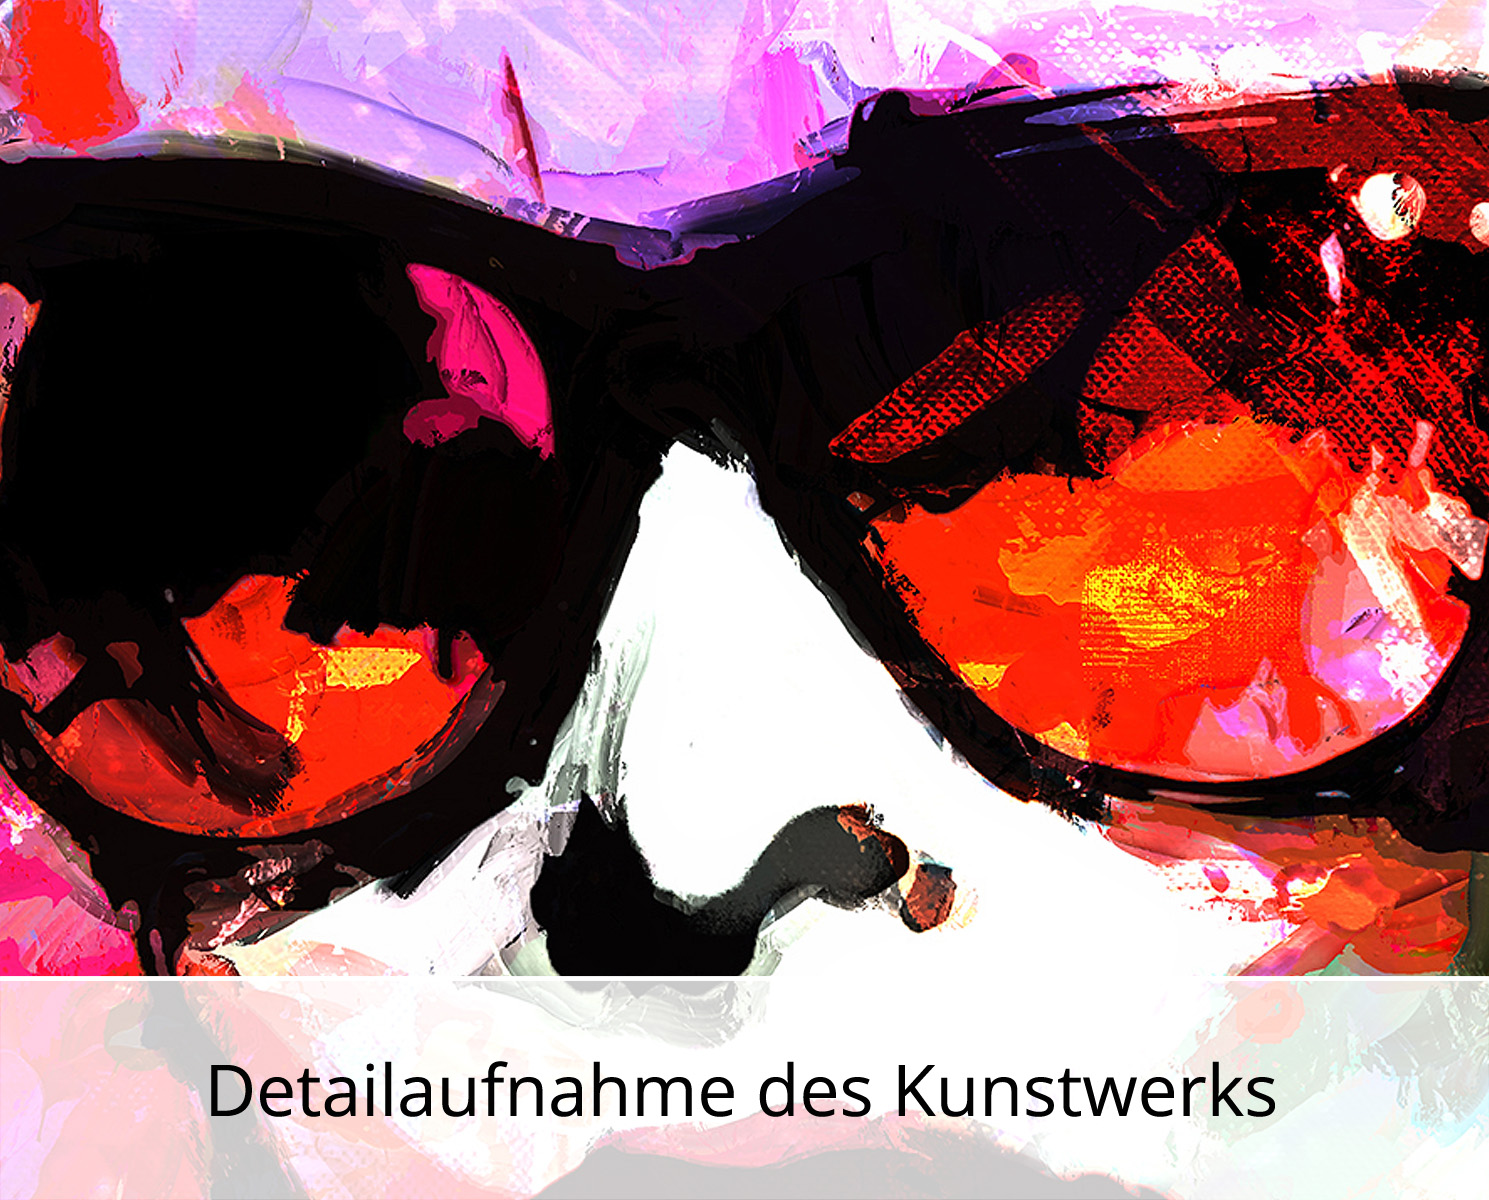 H. Mühlbauer-Gardemin: "Sunglasses", Moderne Pop Art, Original/serielles Unikat